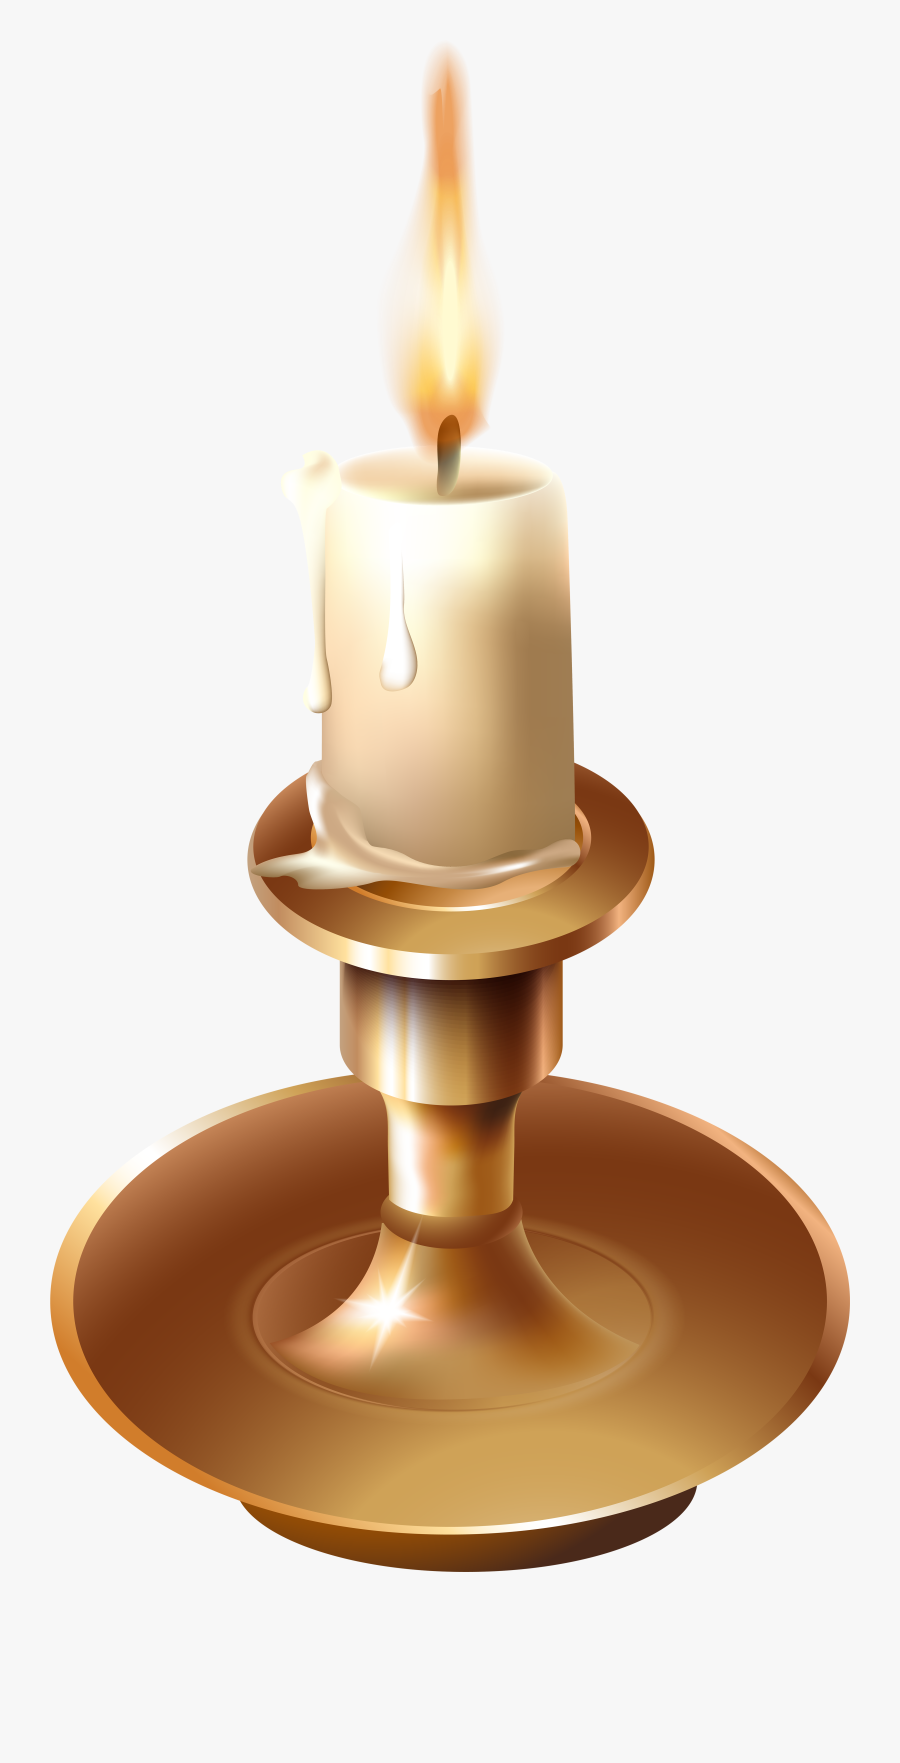 Vinatge Candlestick Png Clip - Candle In Candlestick Png, Transparent Clipart